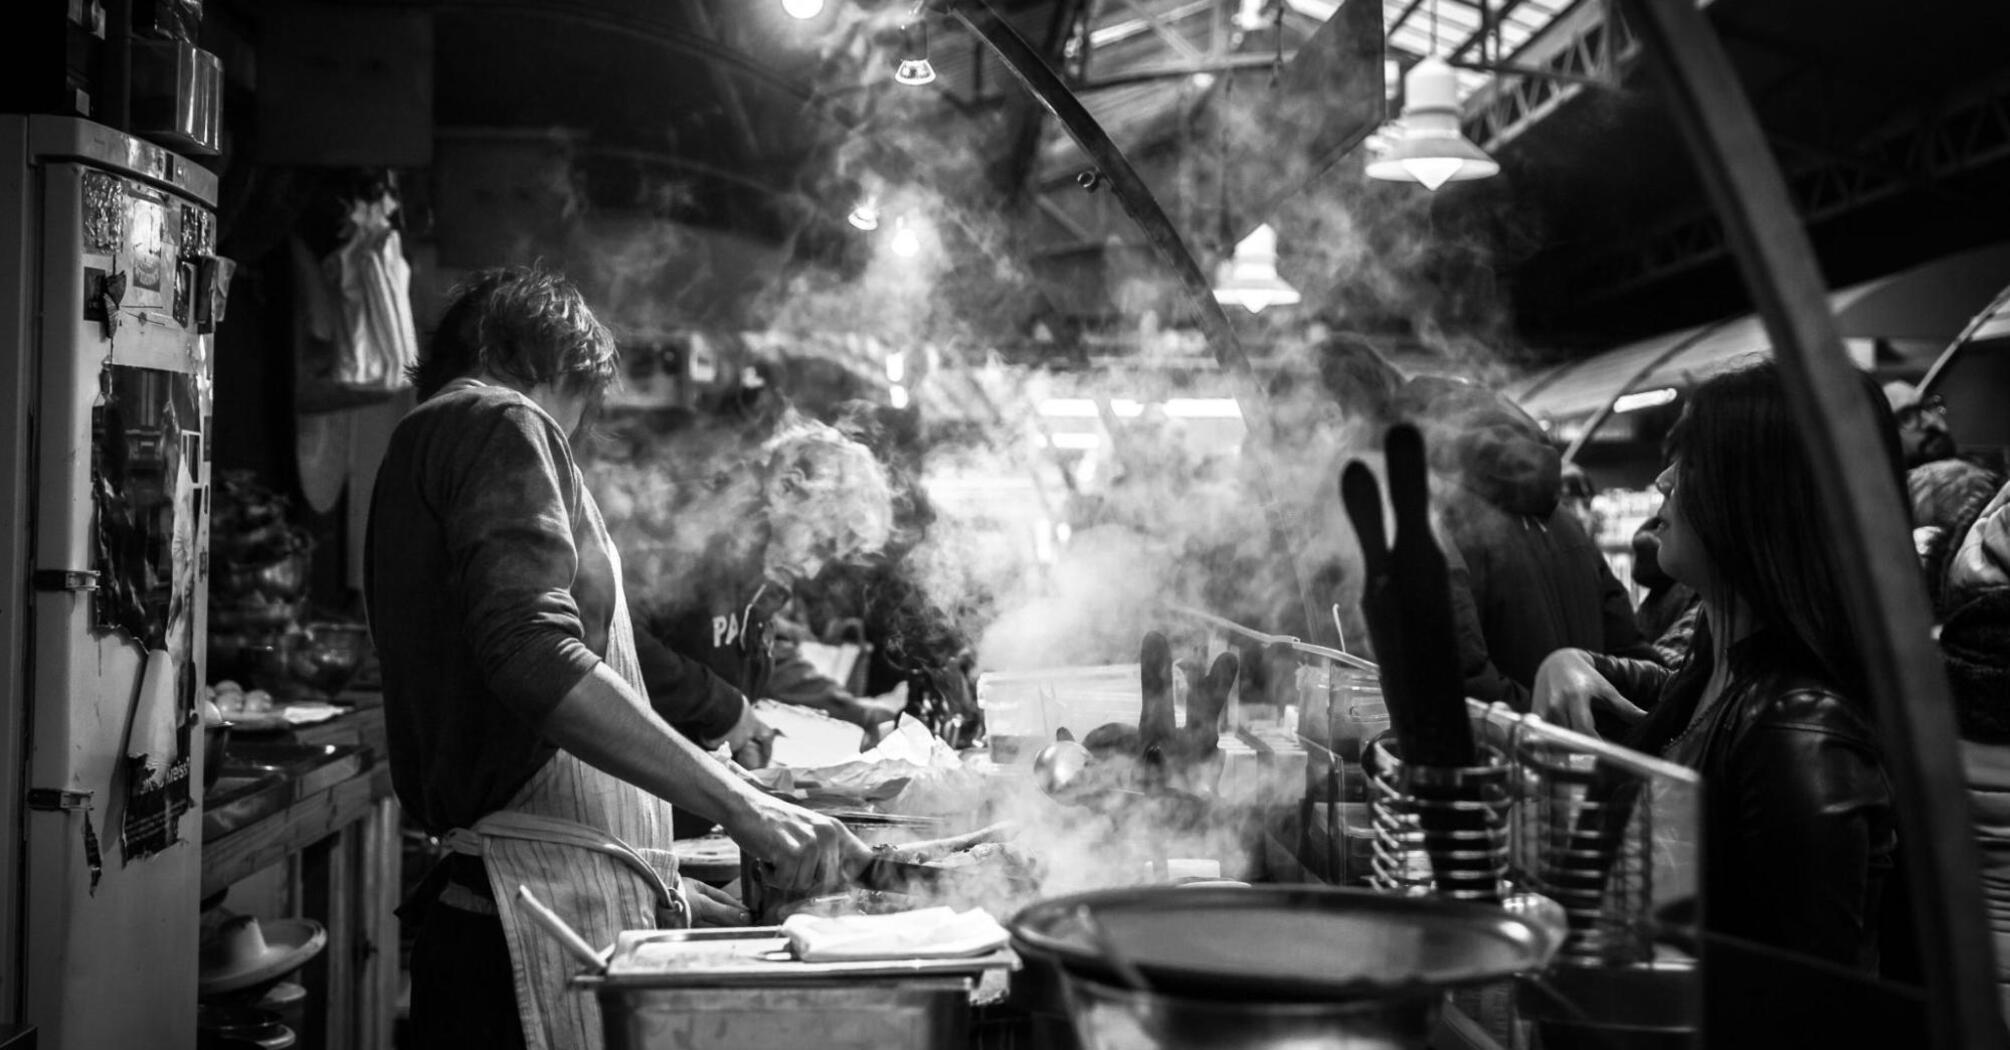 Man preparing food in a crowded street kitchen